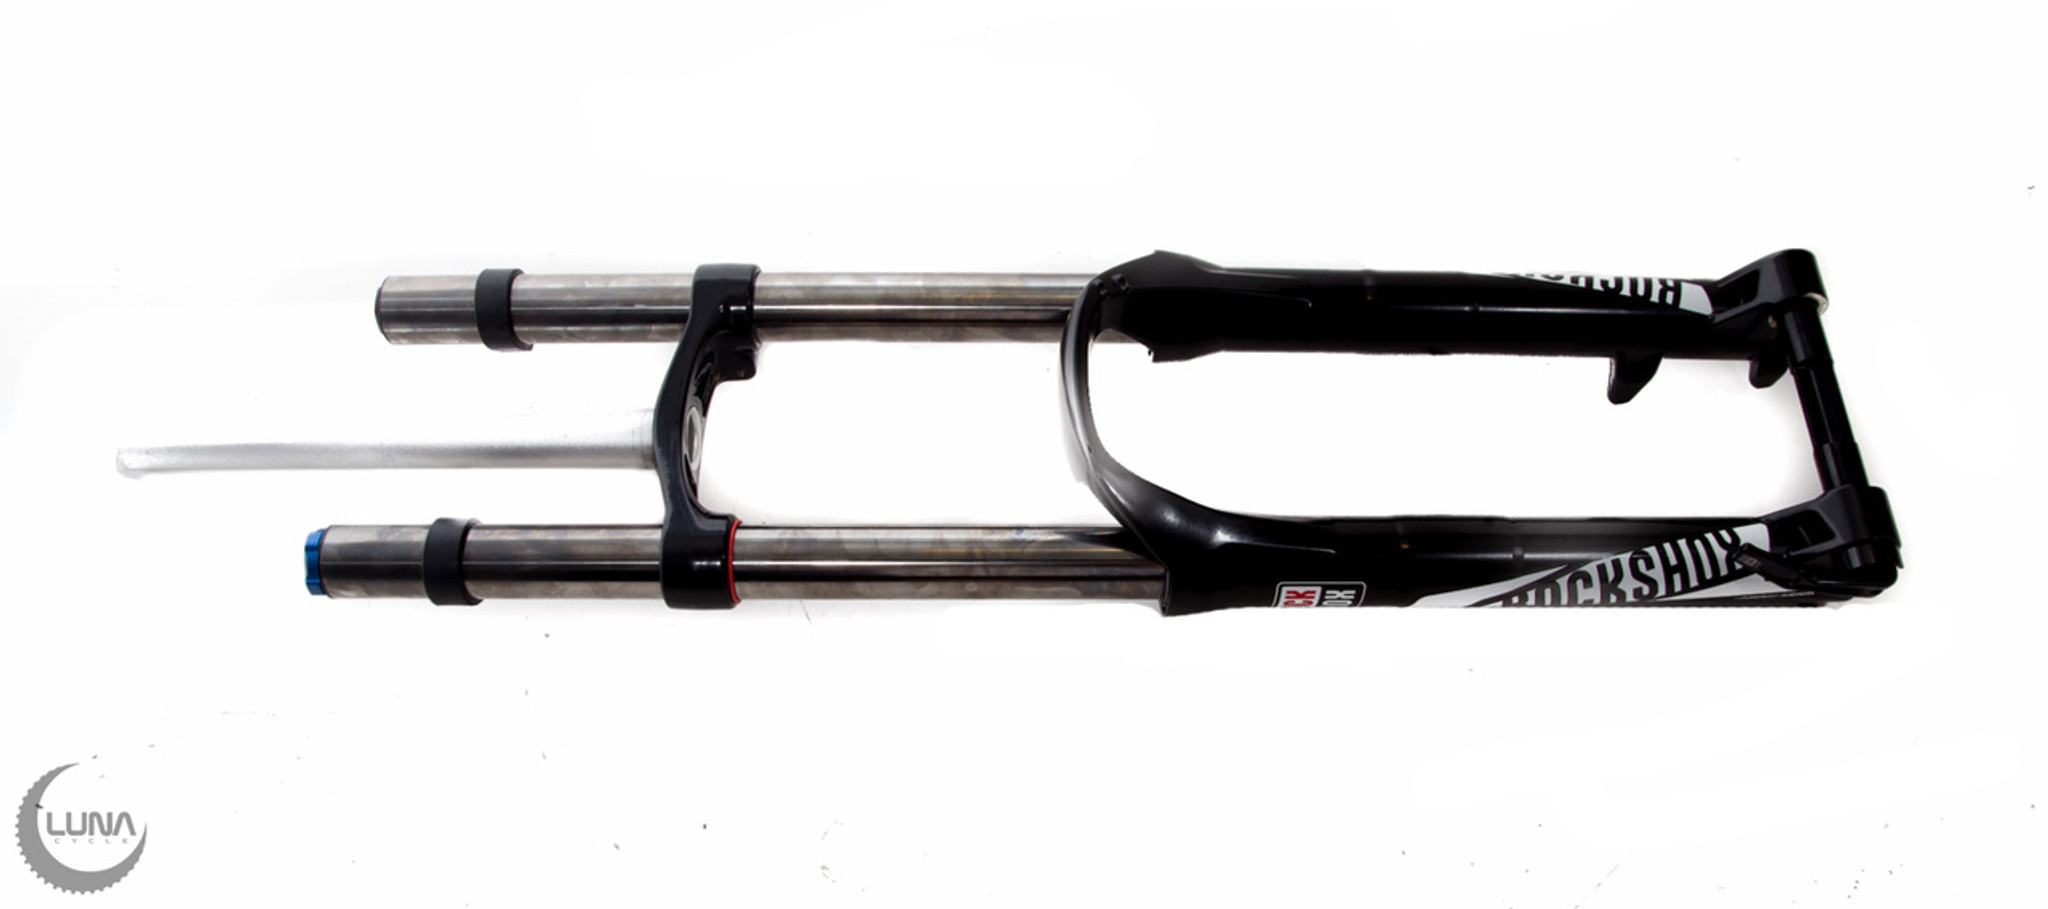 rockshox suspension fork